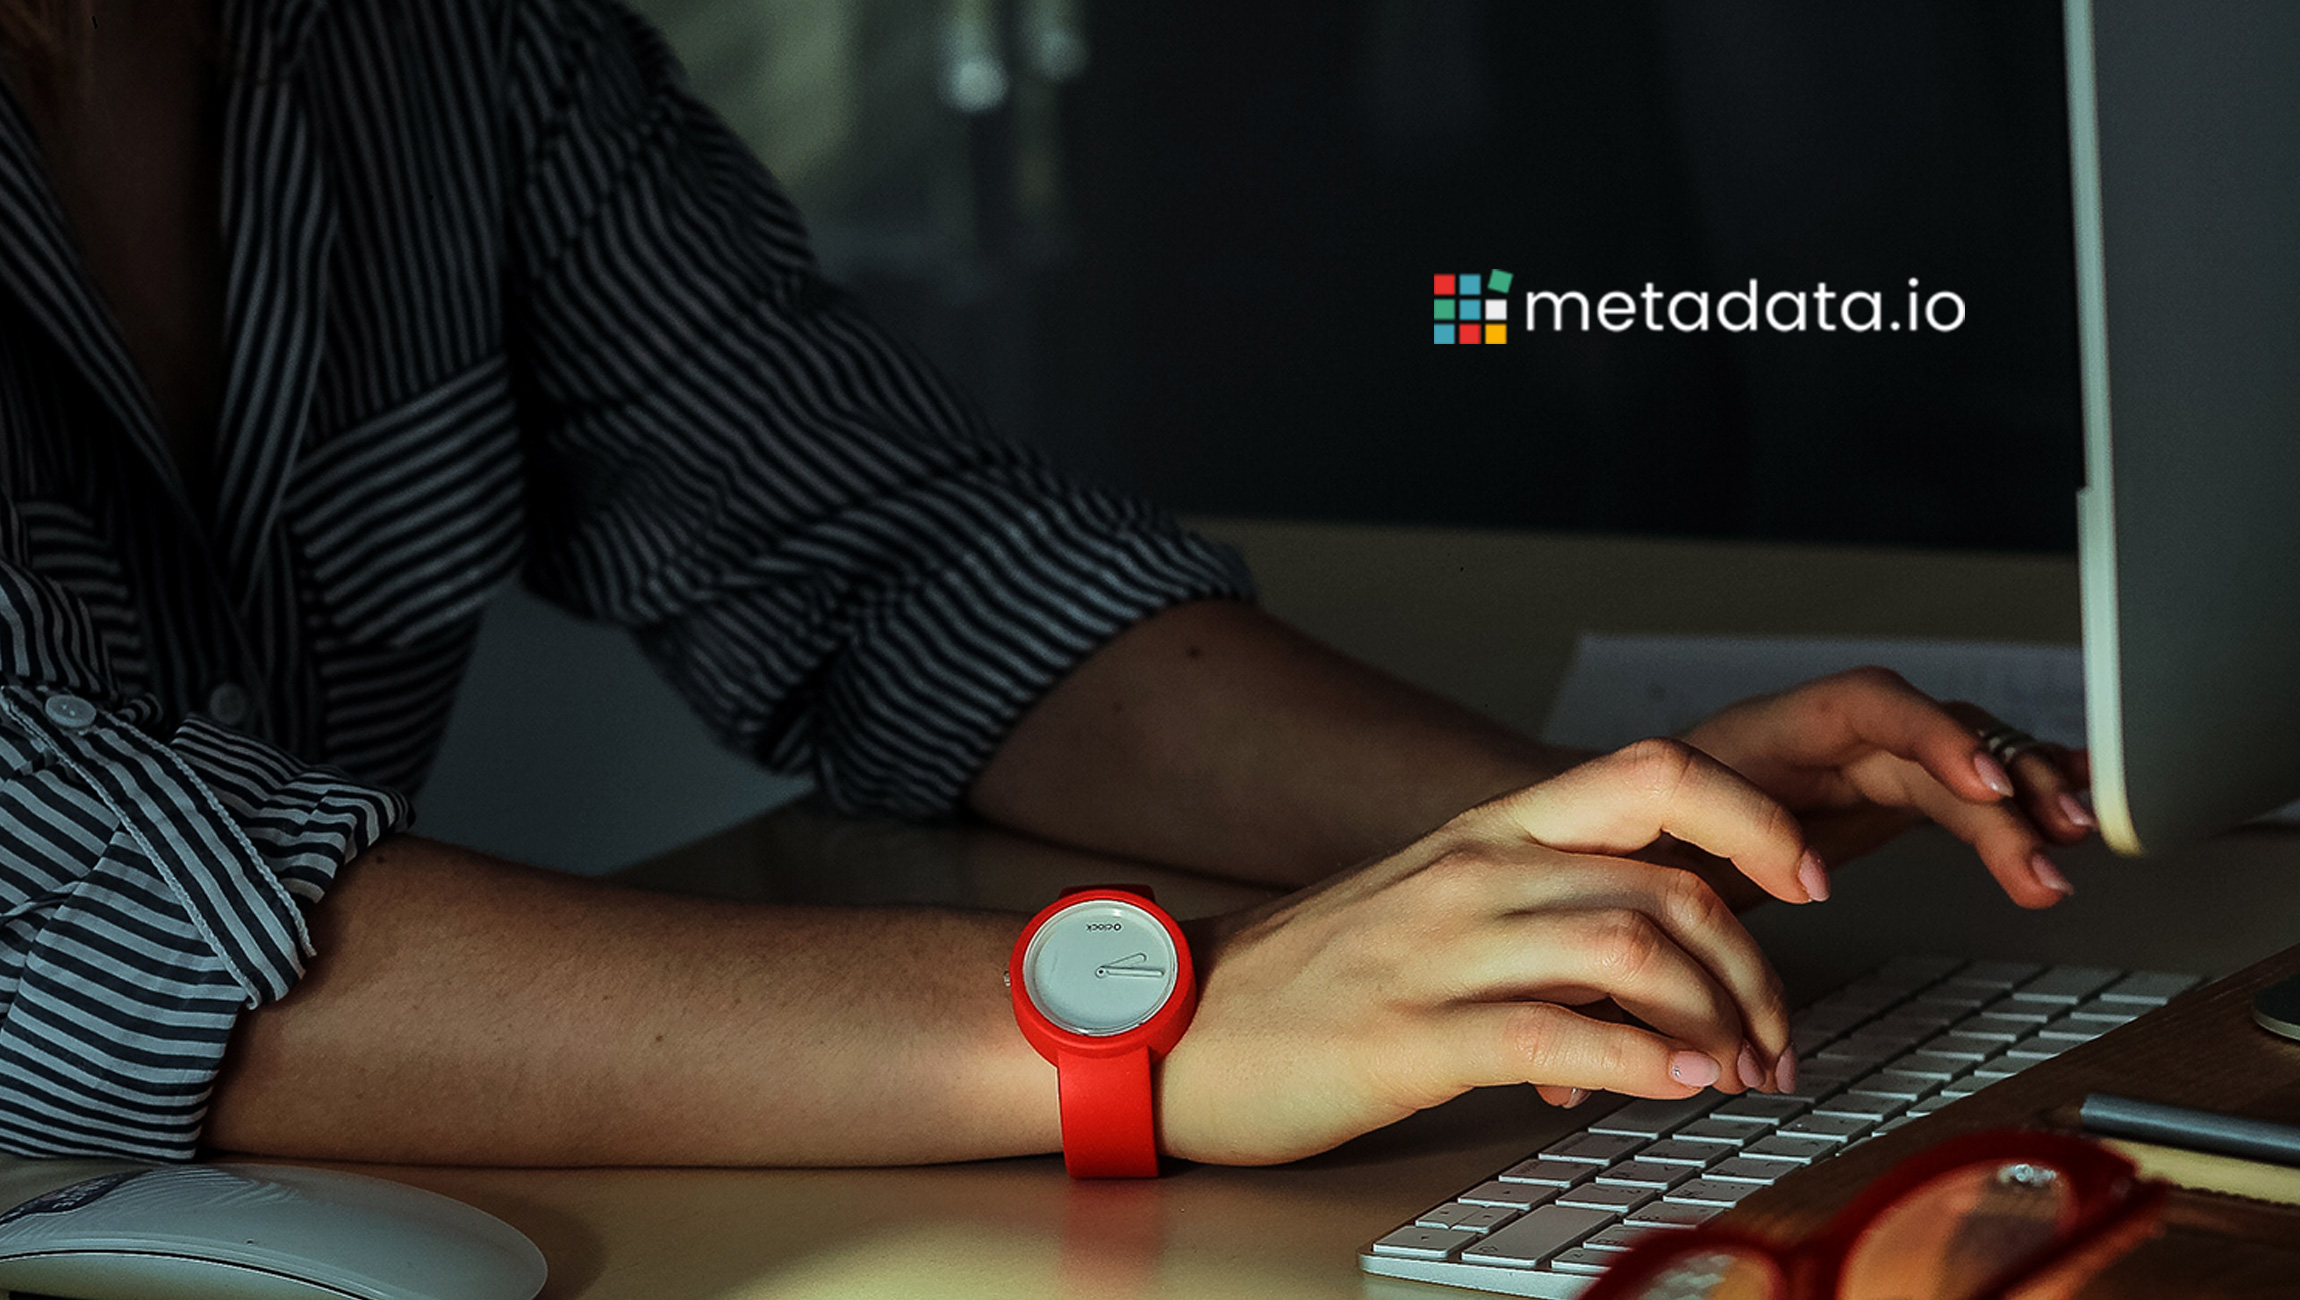 Metadata.io Experiences Dramatic Growth, Launches Latest ...